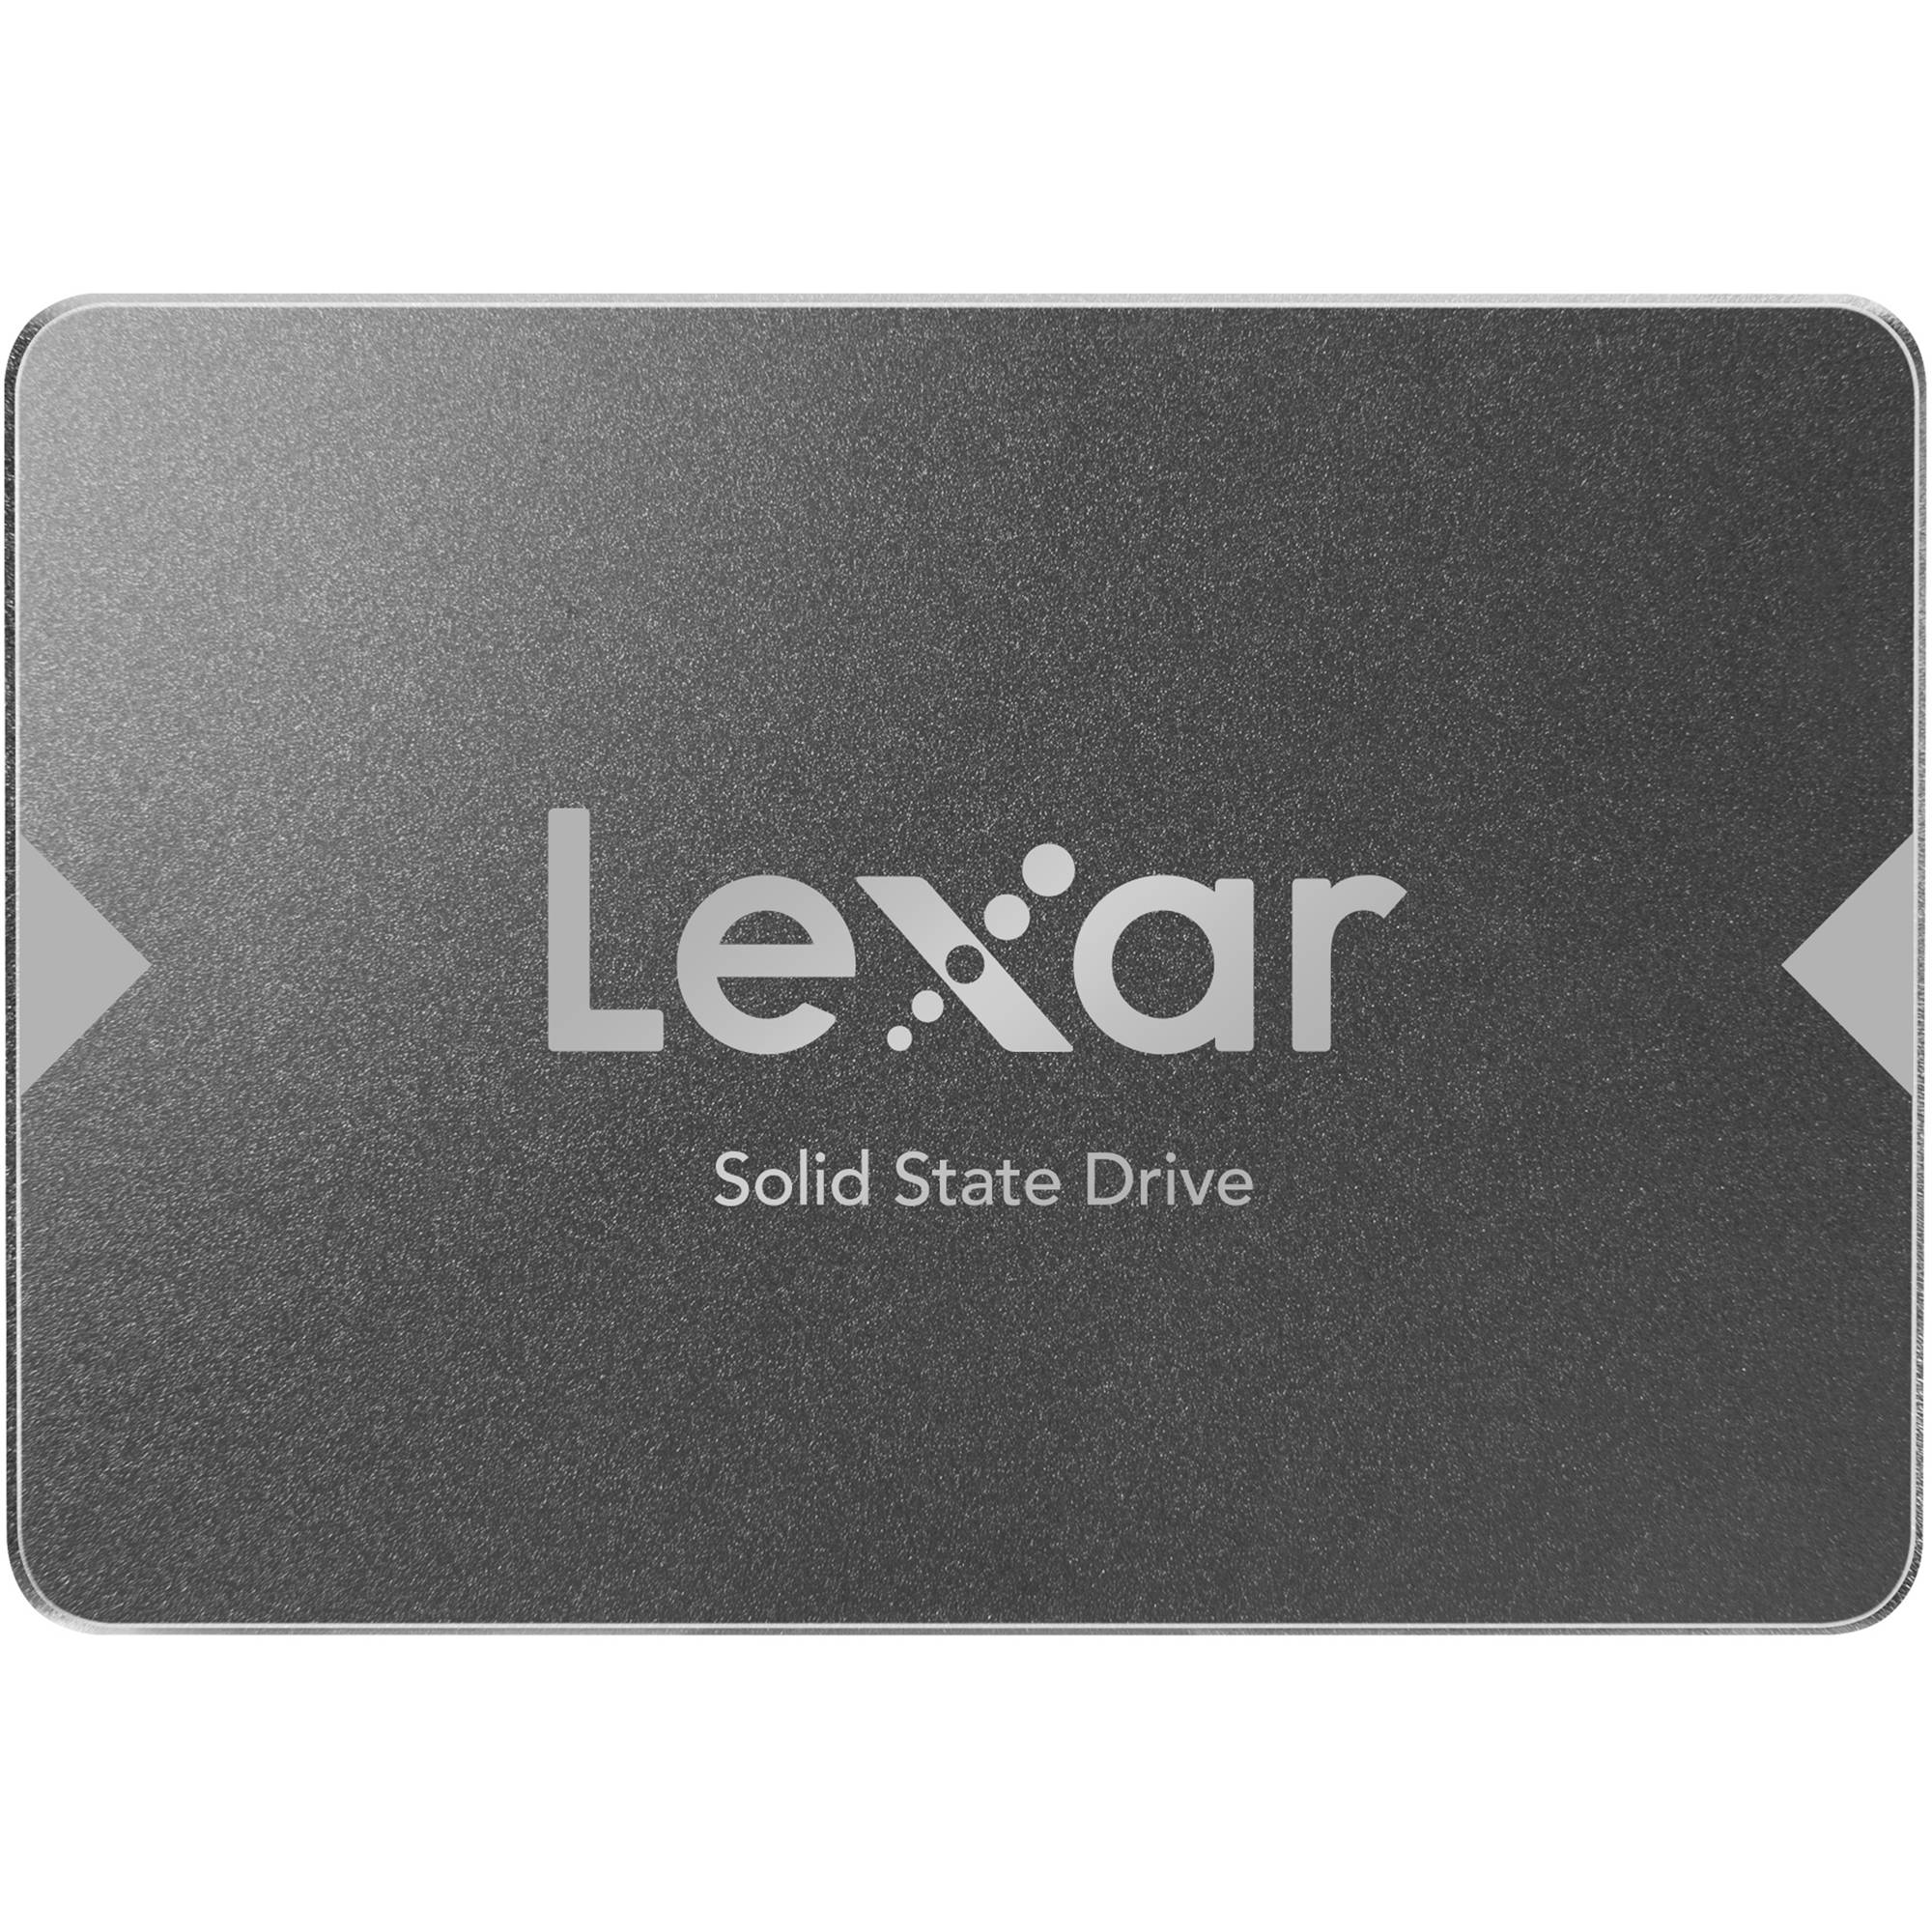 Ổ cứng SSD LEXAR NS100 128GB Sata3 2.5-inch